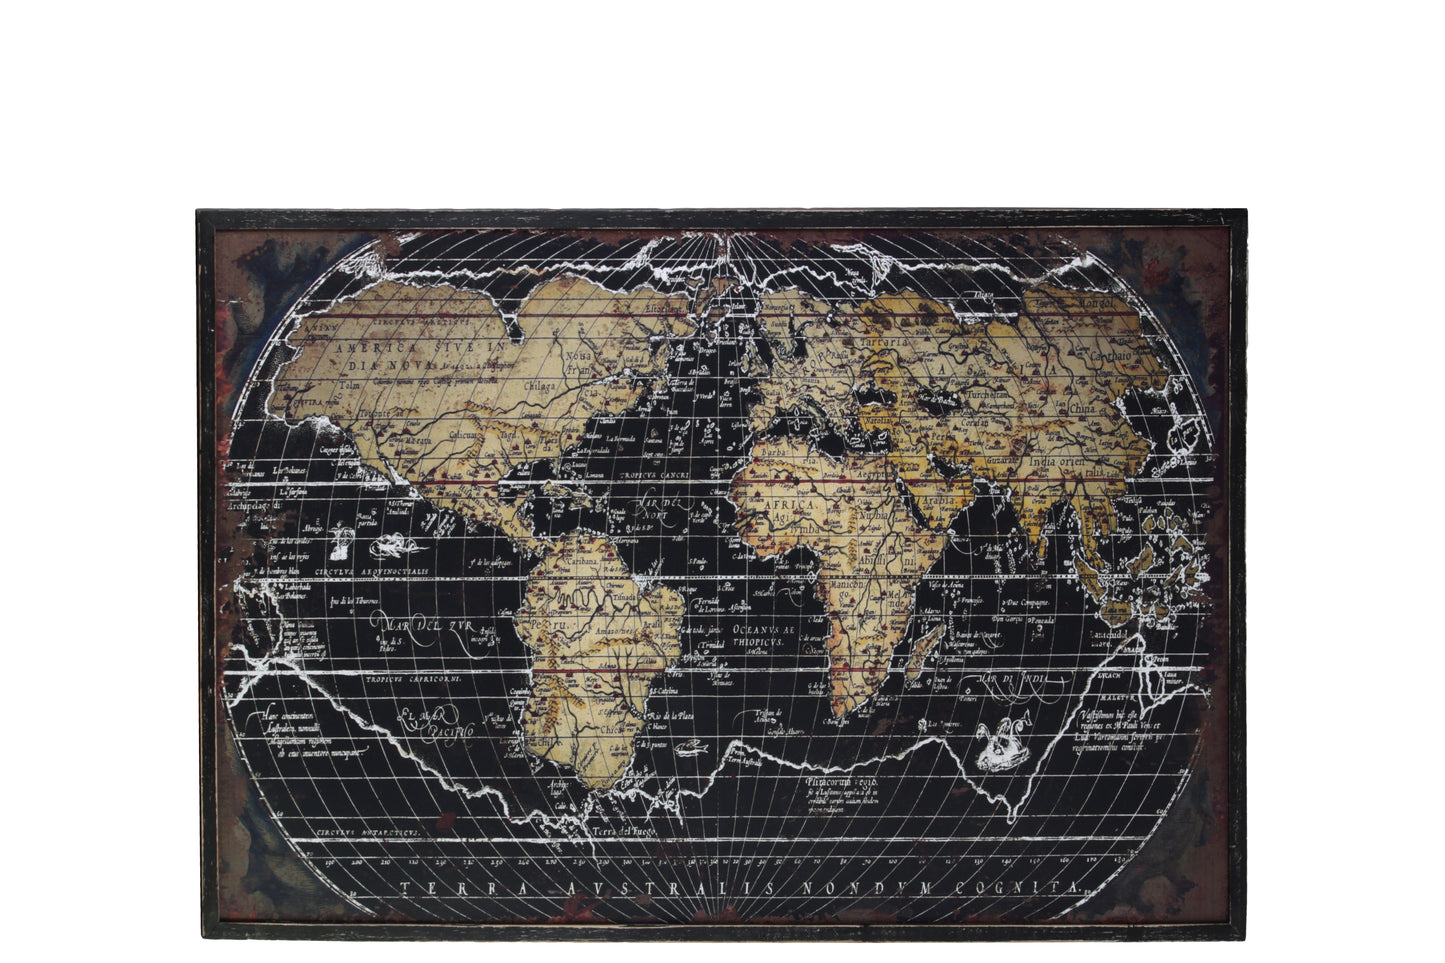 Wood Rectangular Panel Giclee Print of "World Atlas"